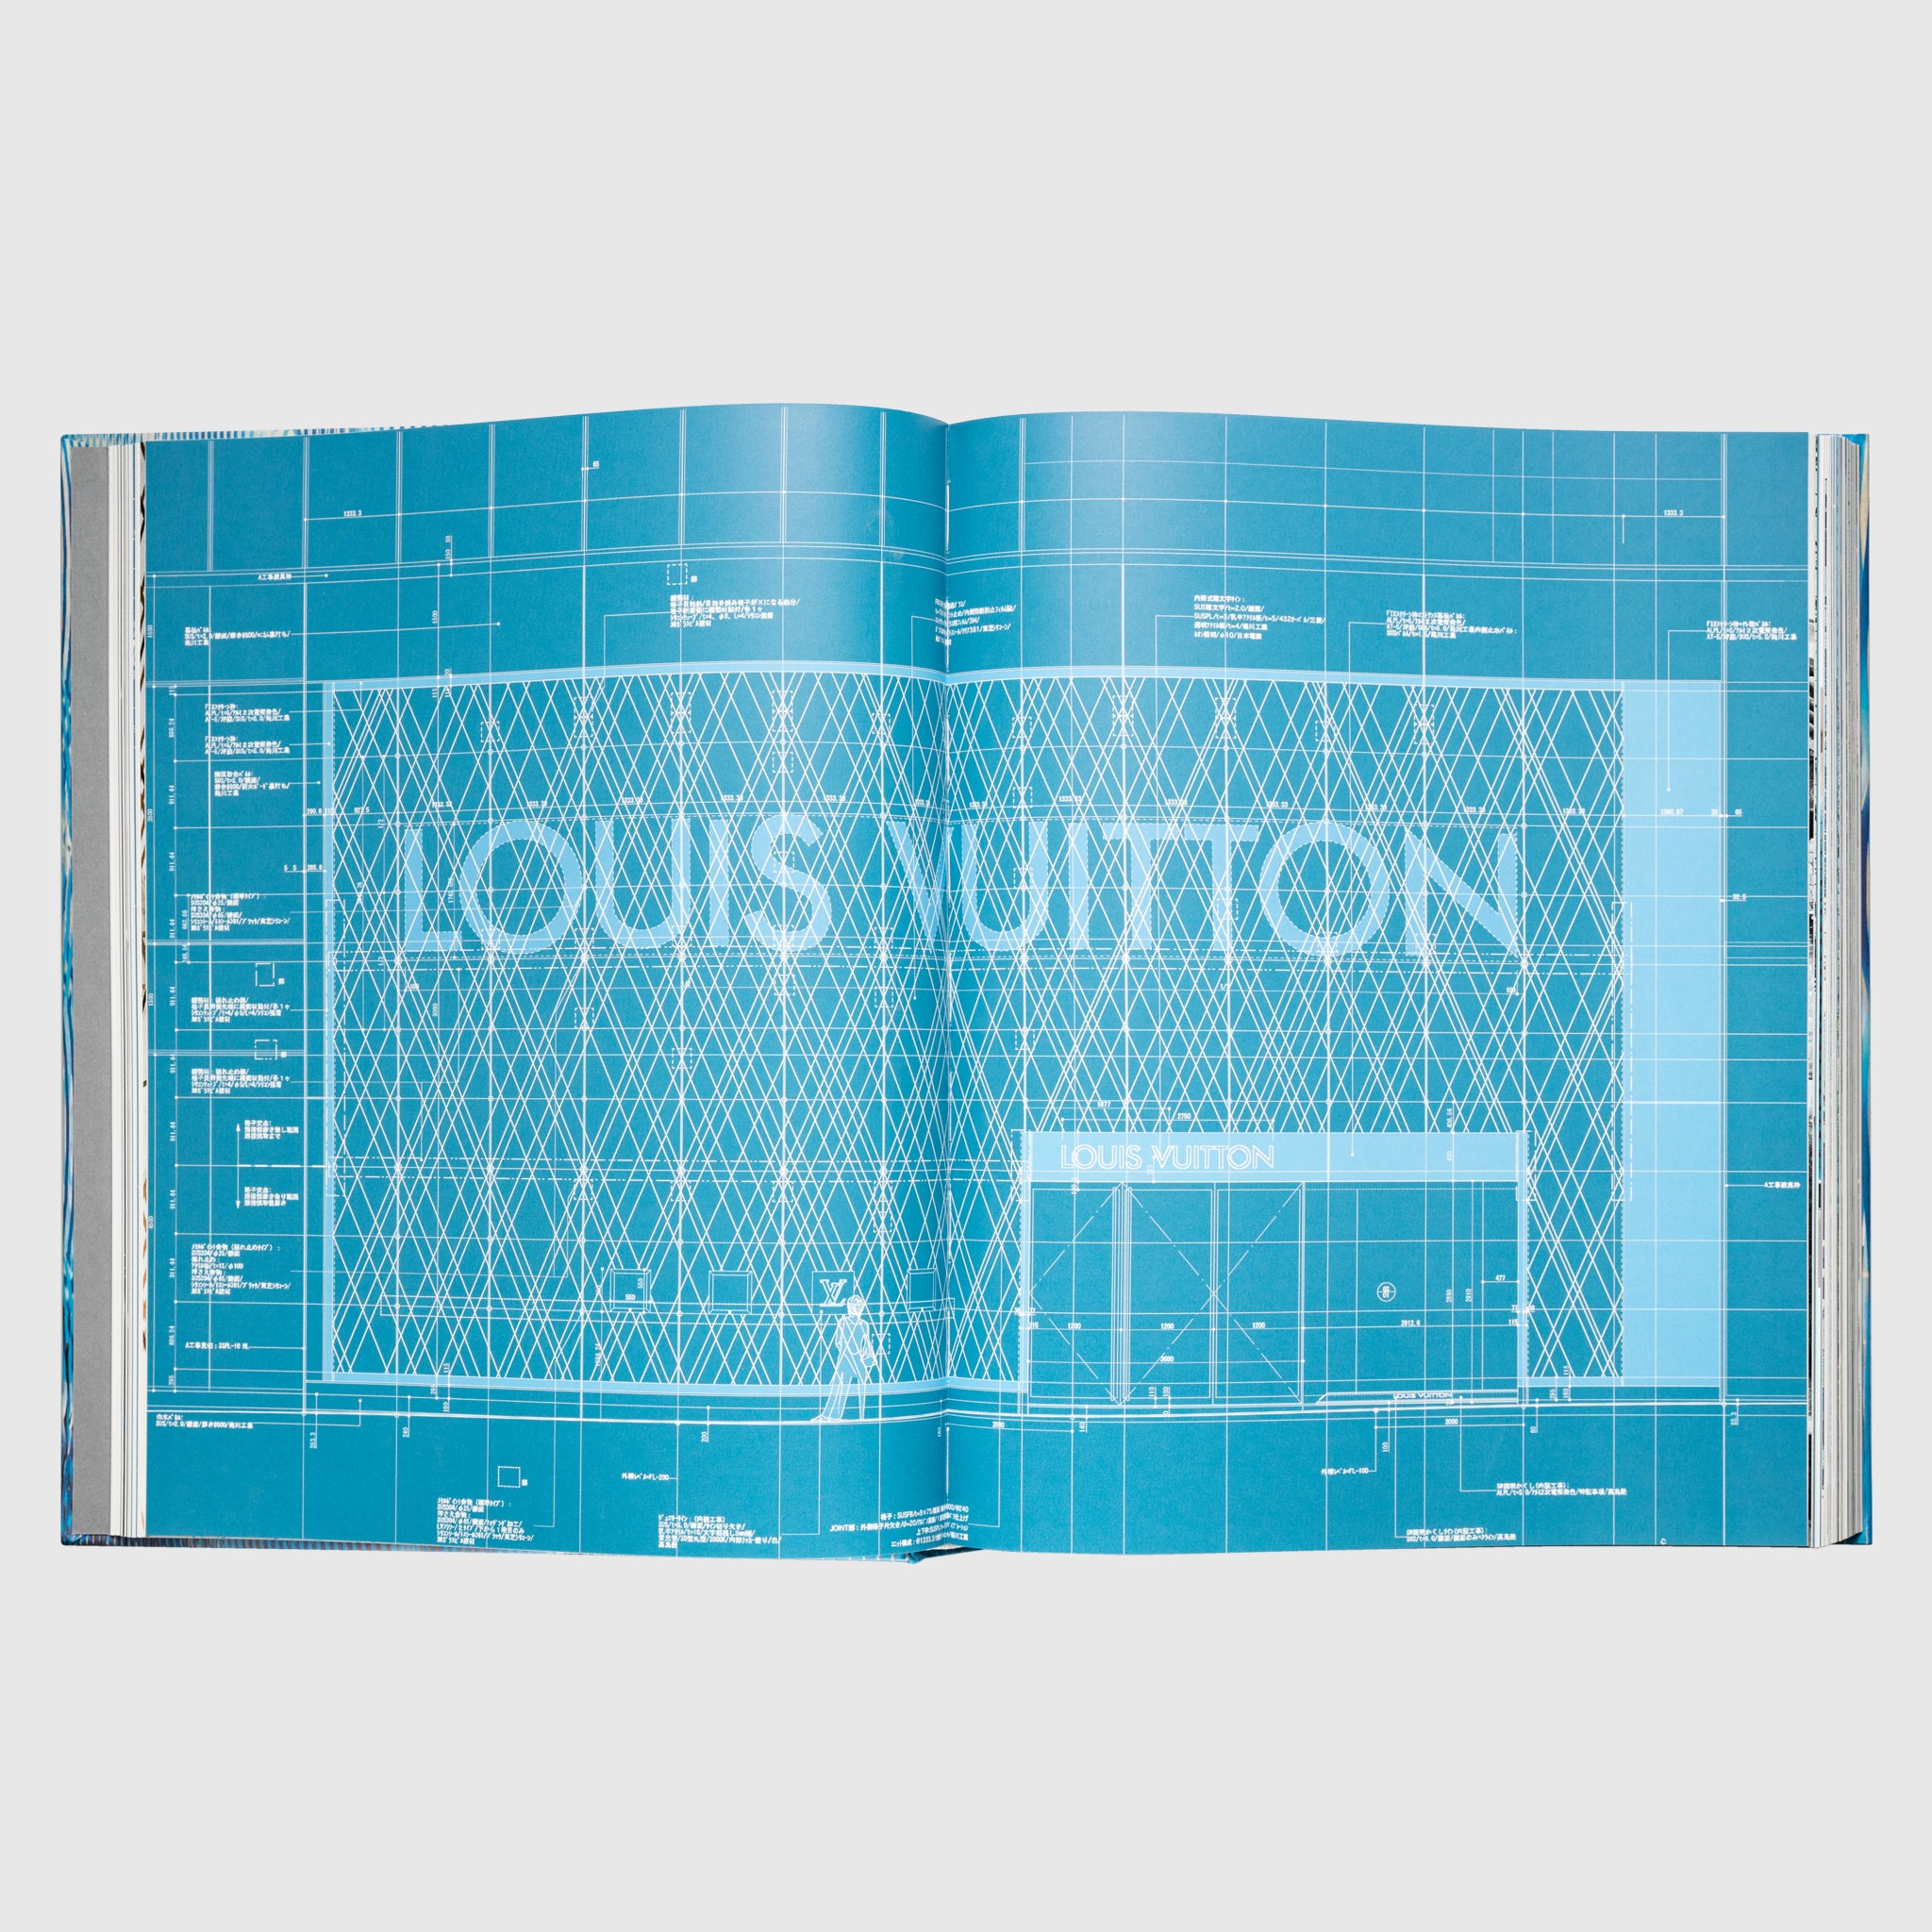 LOUIS VUITTON SKIN: ARCHITECTURE OF LUXURY (TOKYO EDITION)